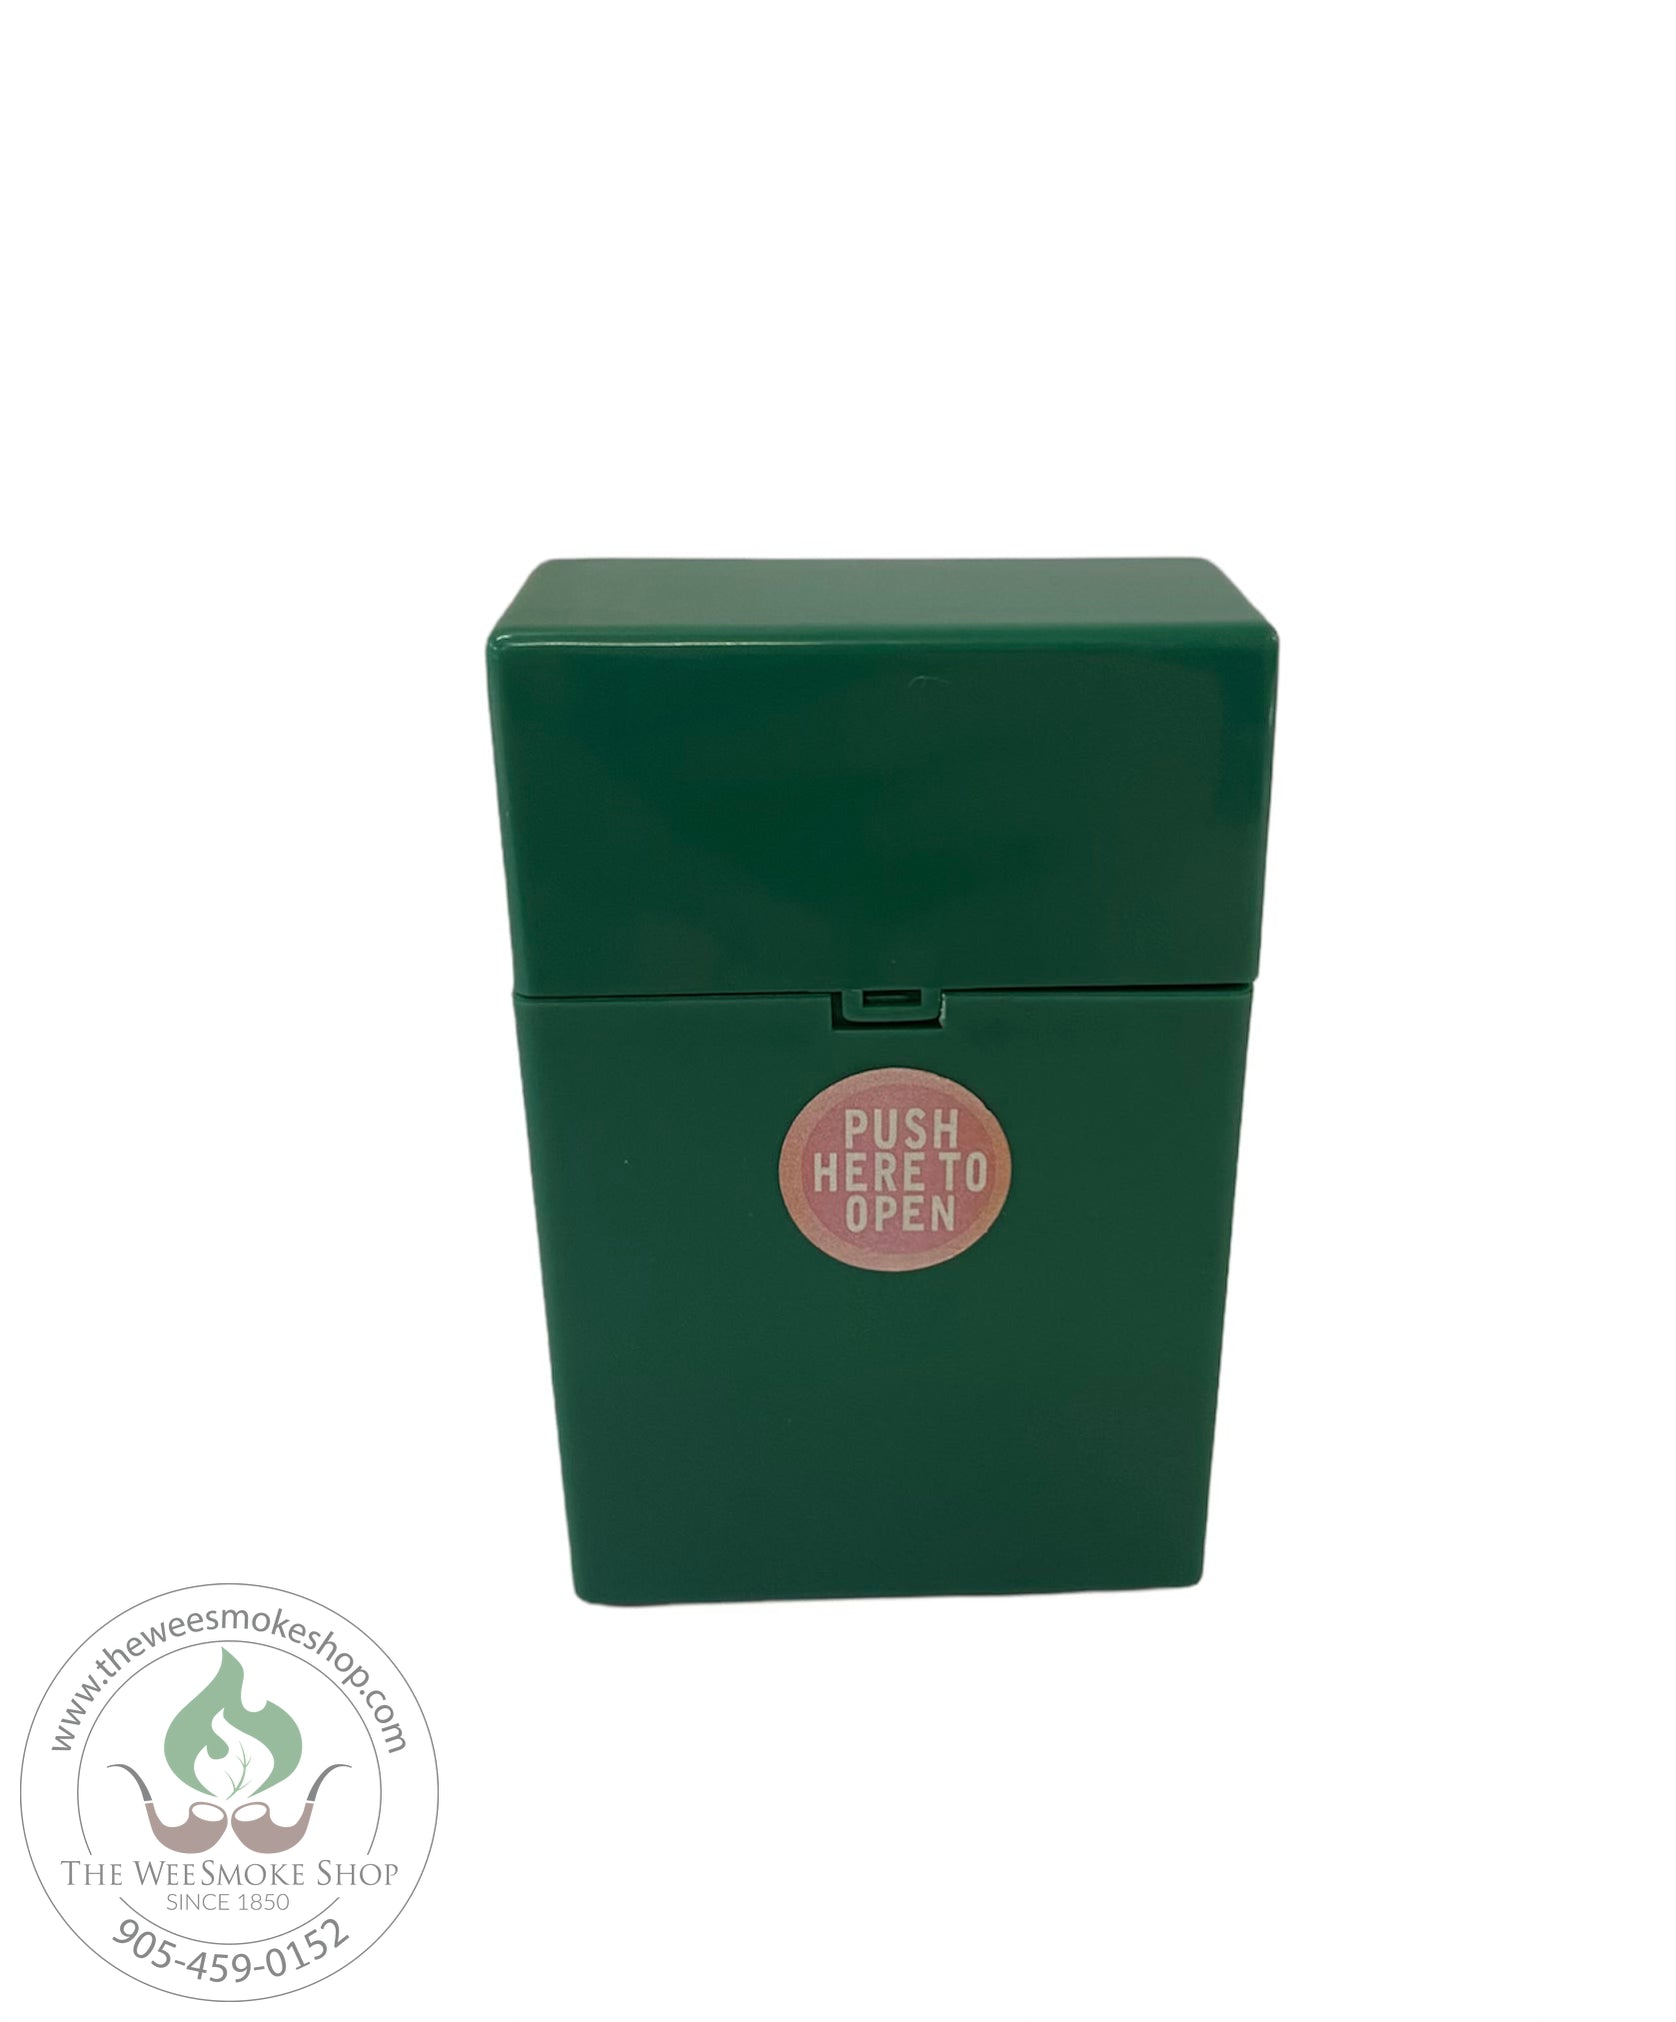 Green Acrylic Cigarette Cases - Wee Smoke Shop